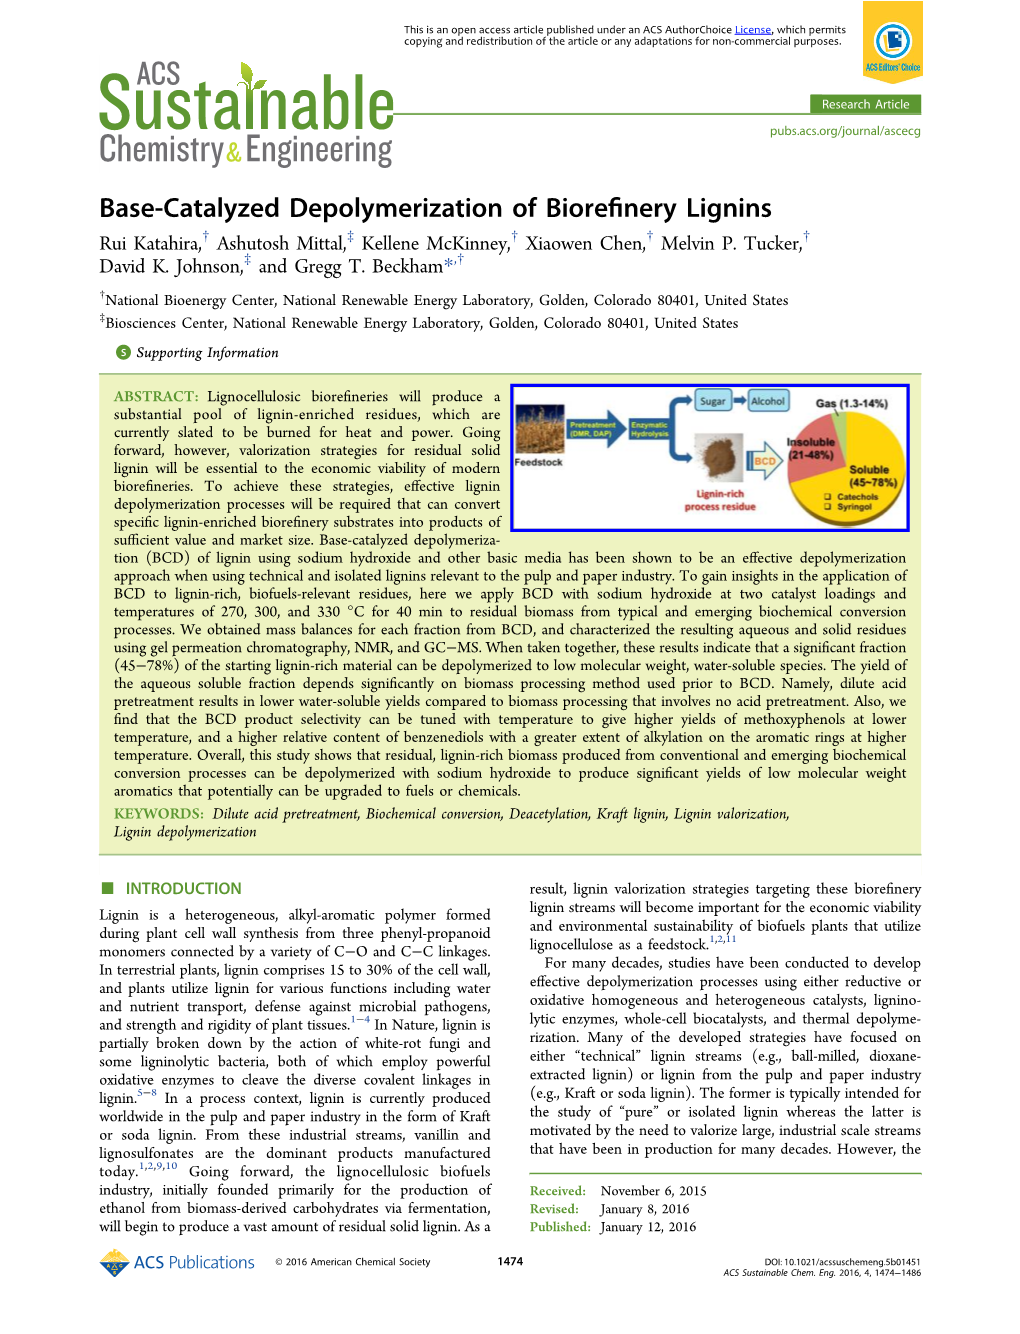 Base-Catalyzed Depolymerization of Biorefinery Lignins